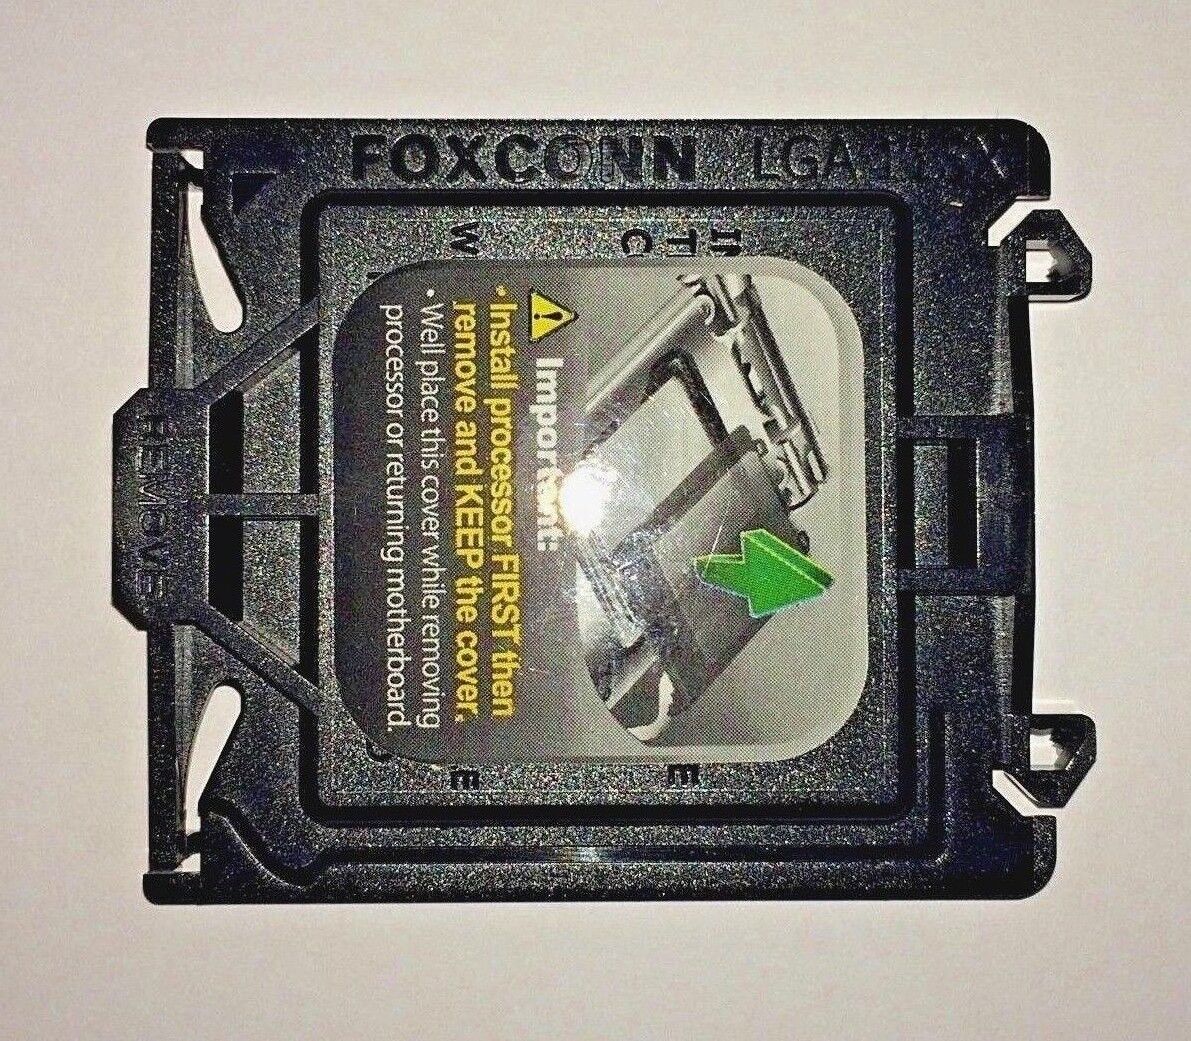 10x Genuine Foxconn CPU Socket Protector Cap Intel 1150 1151 1155 1156 USA Selle